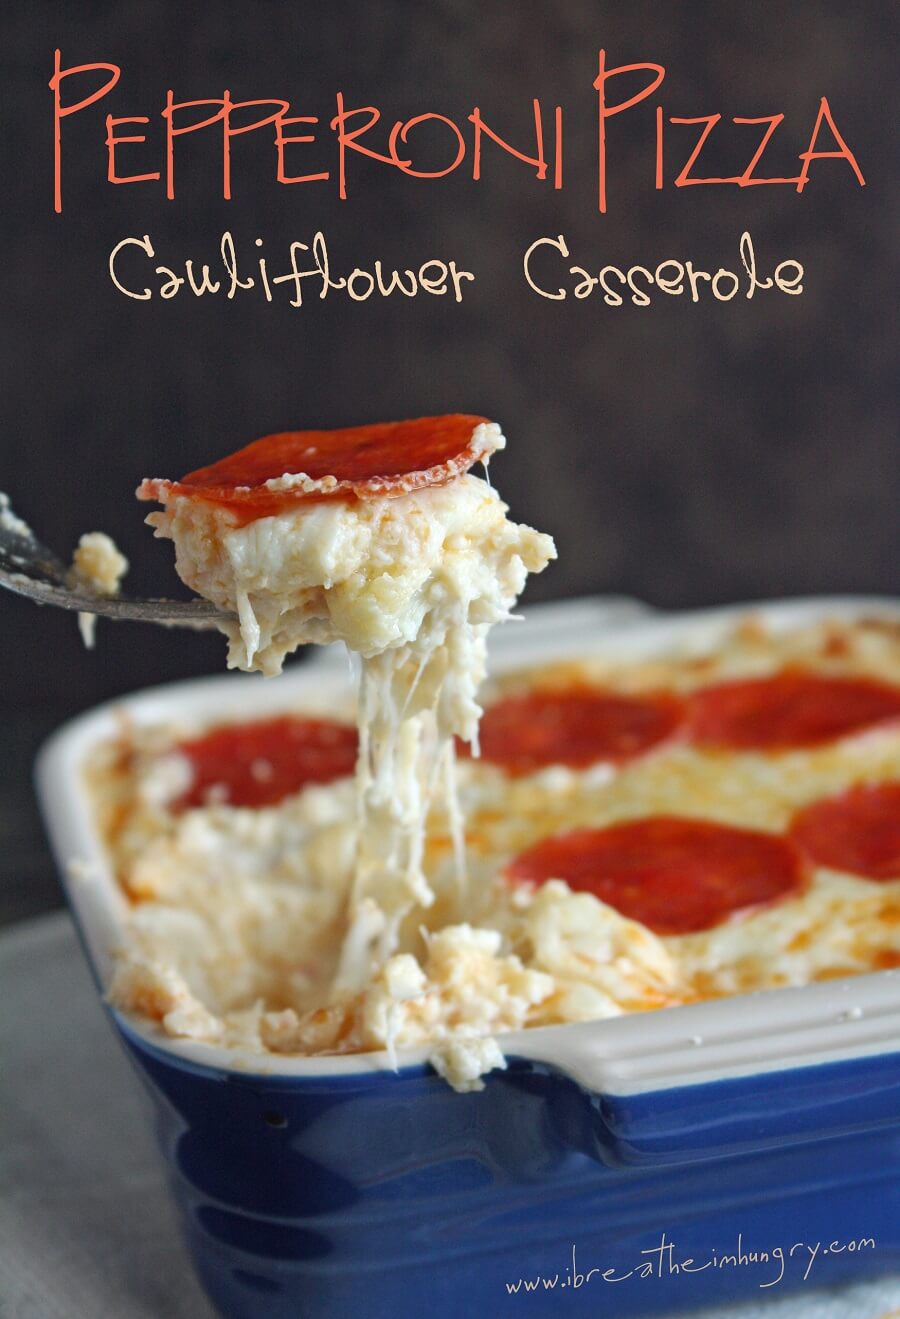 Keto Cauliflower Casserole with pepperoni and mozzarella cheese in a blue dish